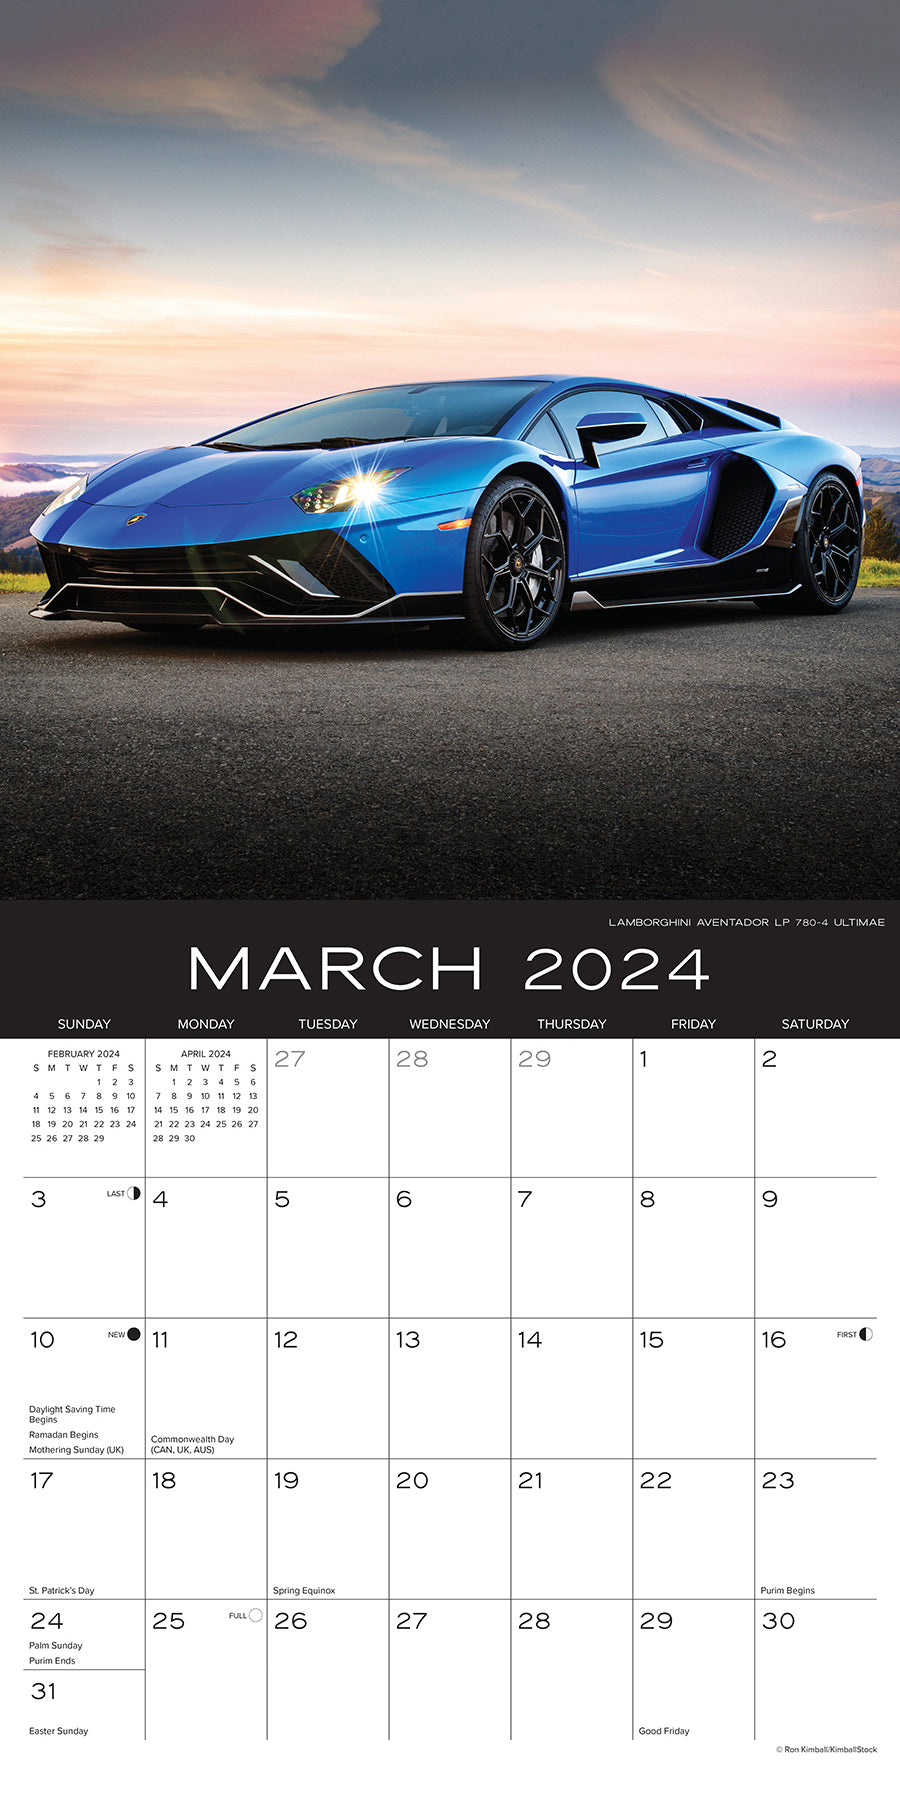 2024 Dream Cars (by Willow Creek) - Wall Calendar